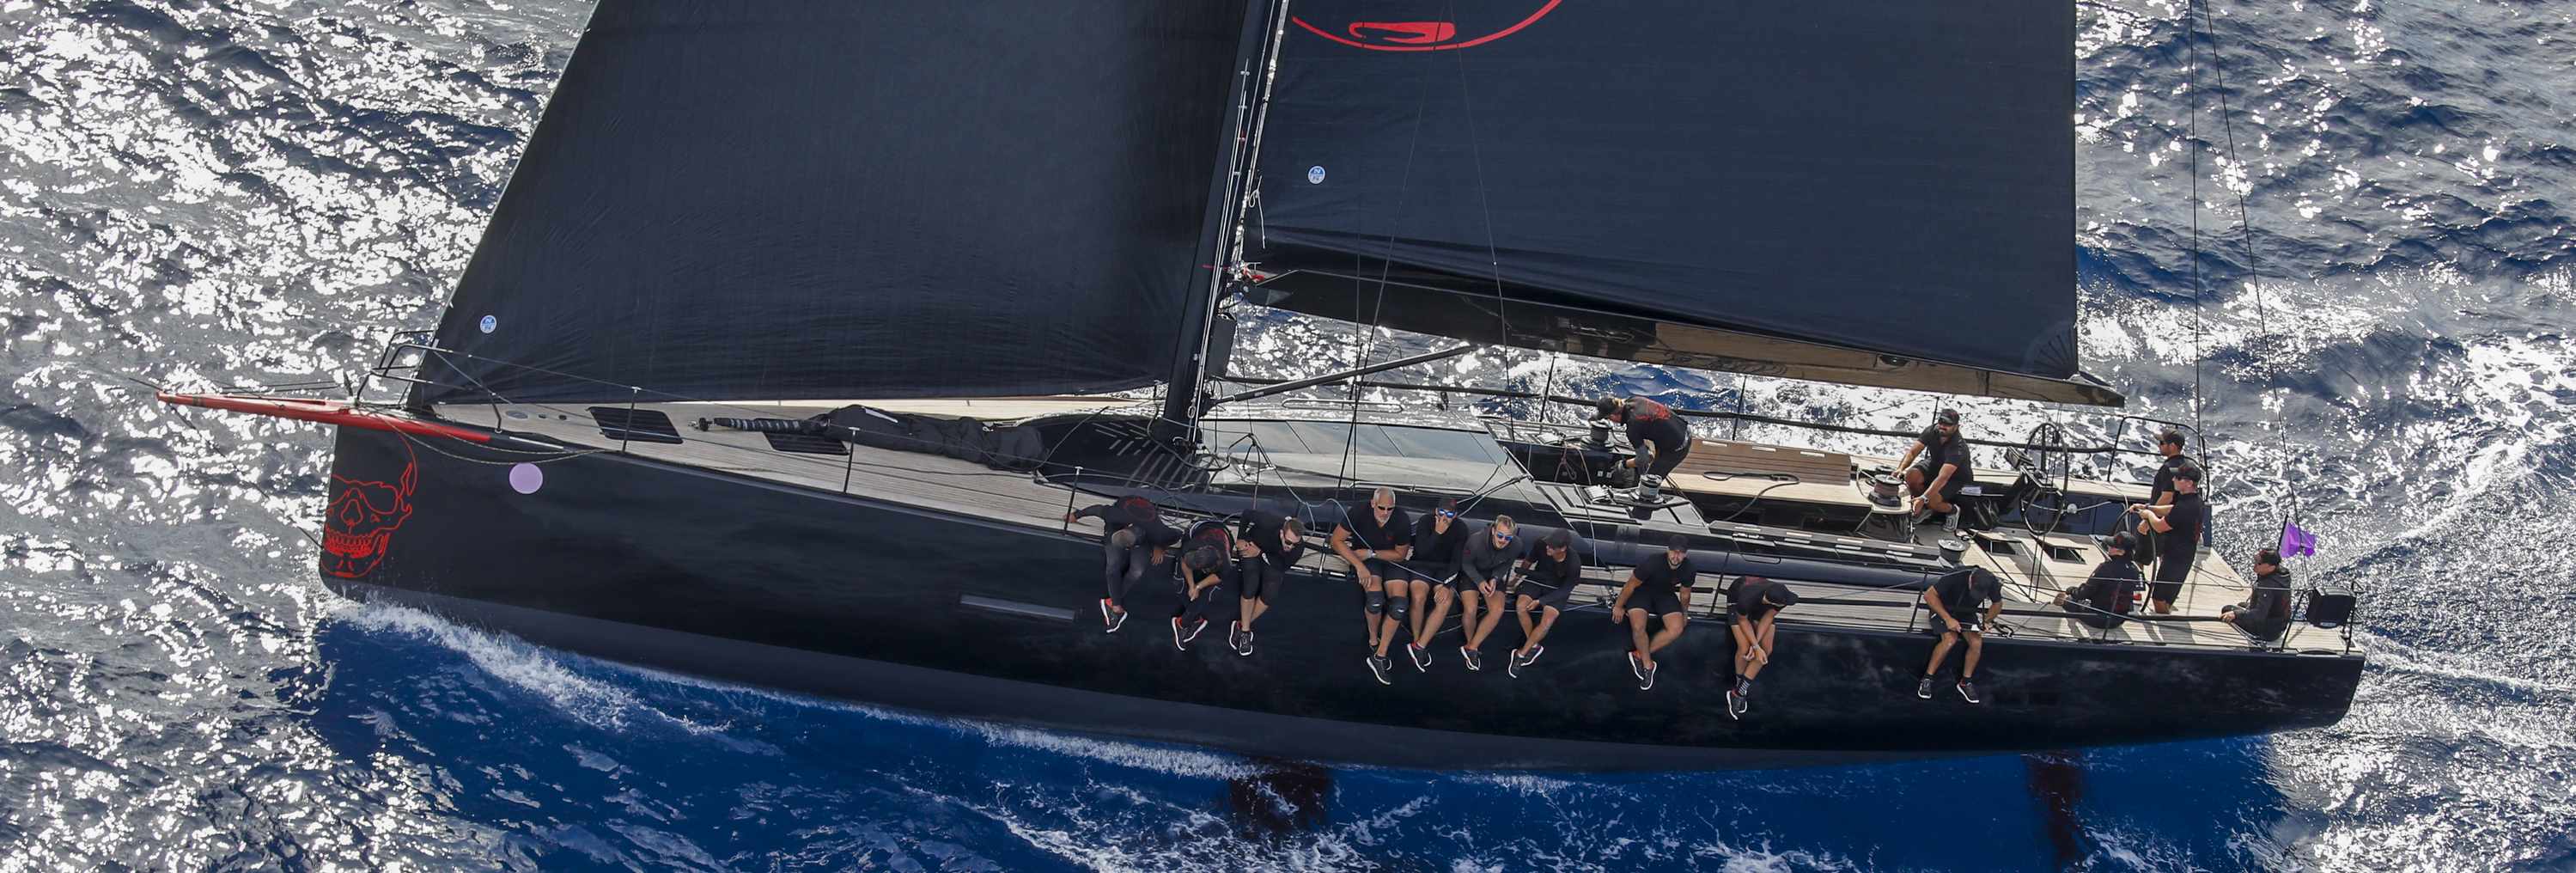 BLACK LEGEND S: In Monaco Marine in May